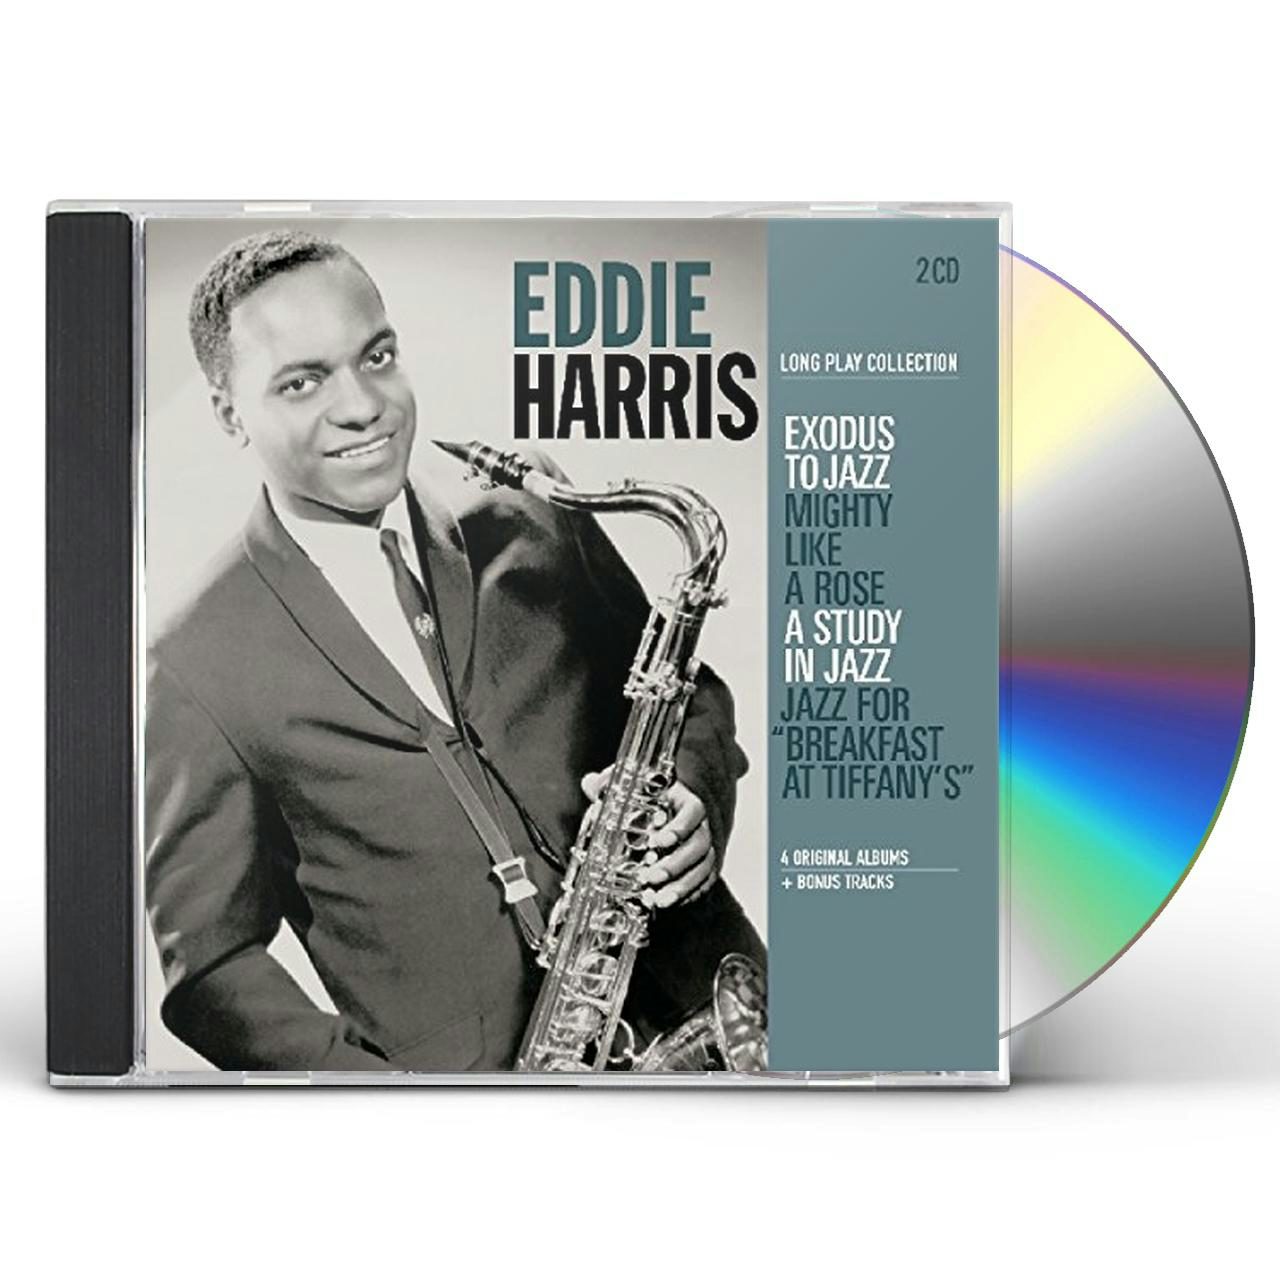 Eddie Harris LONG PLAY COLLECTION CD